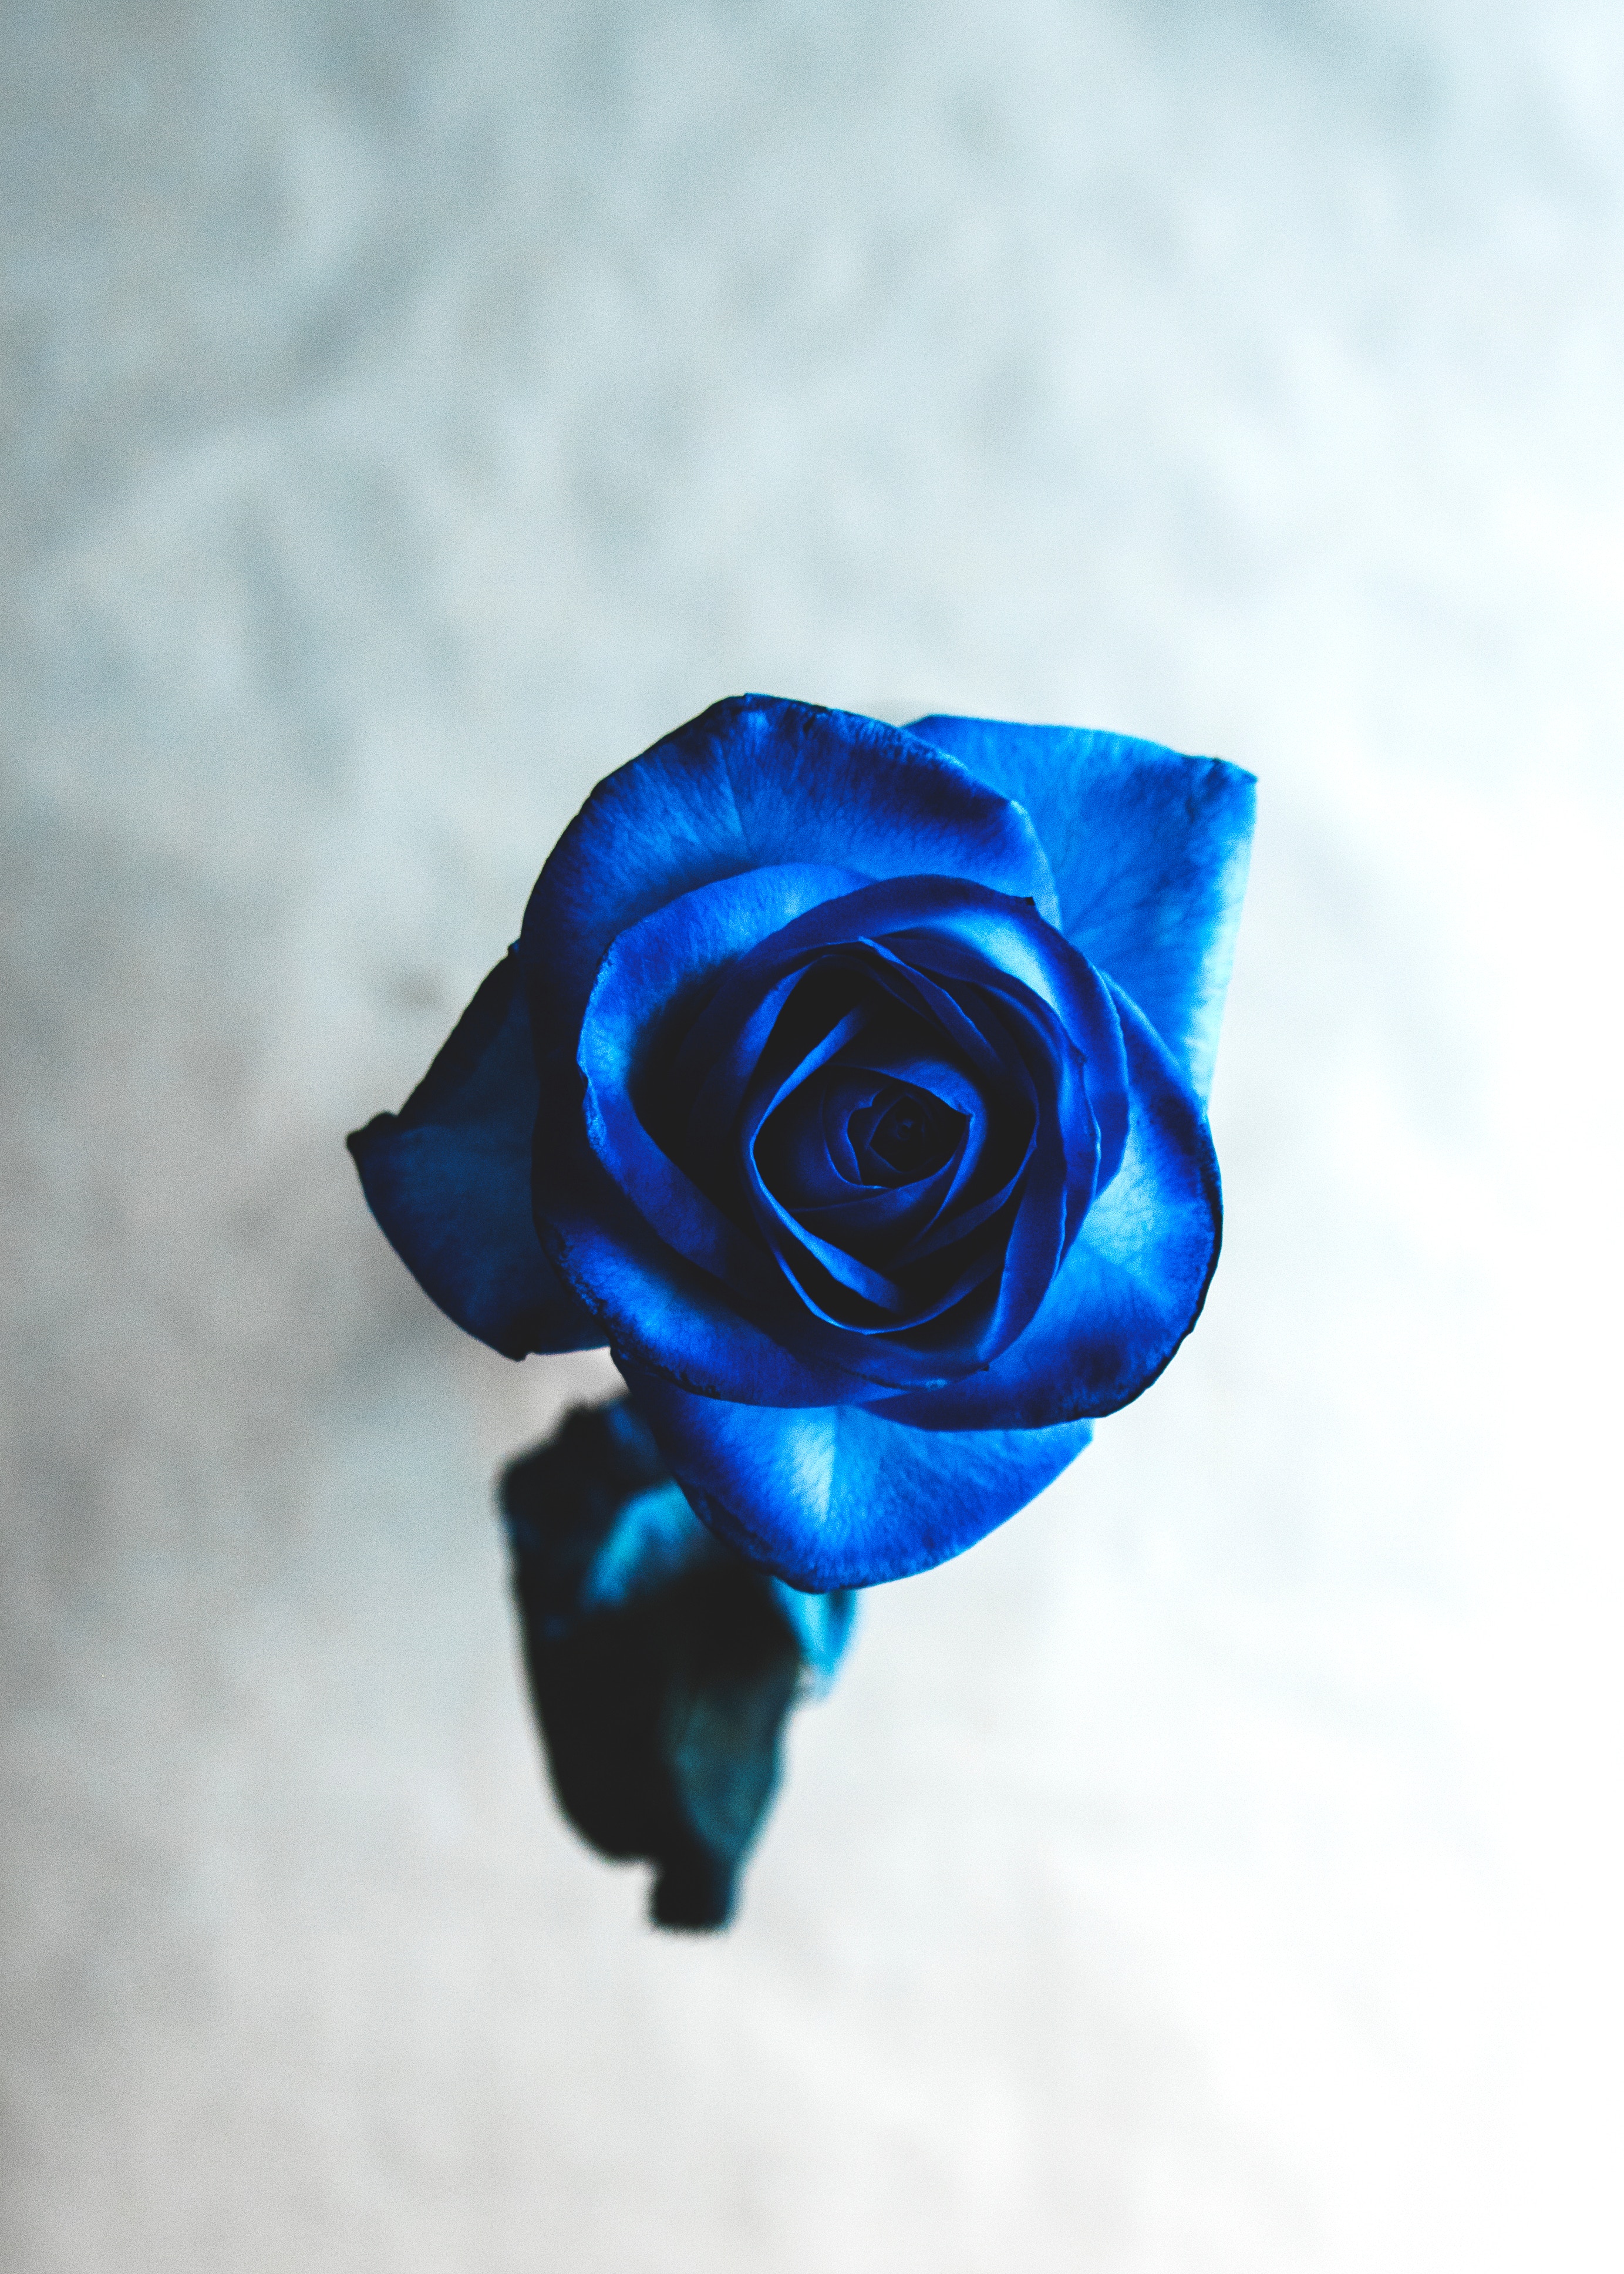 rose flower, blur, flowers, blue, flower, rose, bud, smooth cellphone